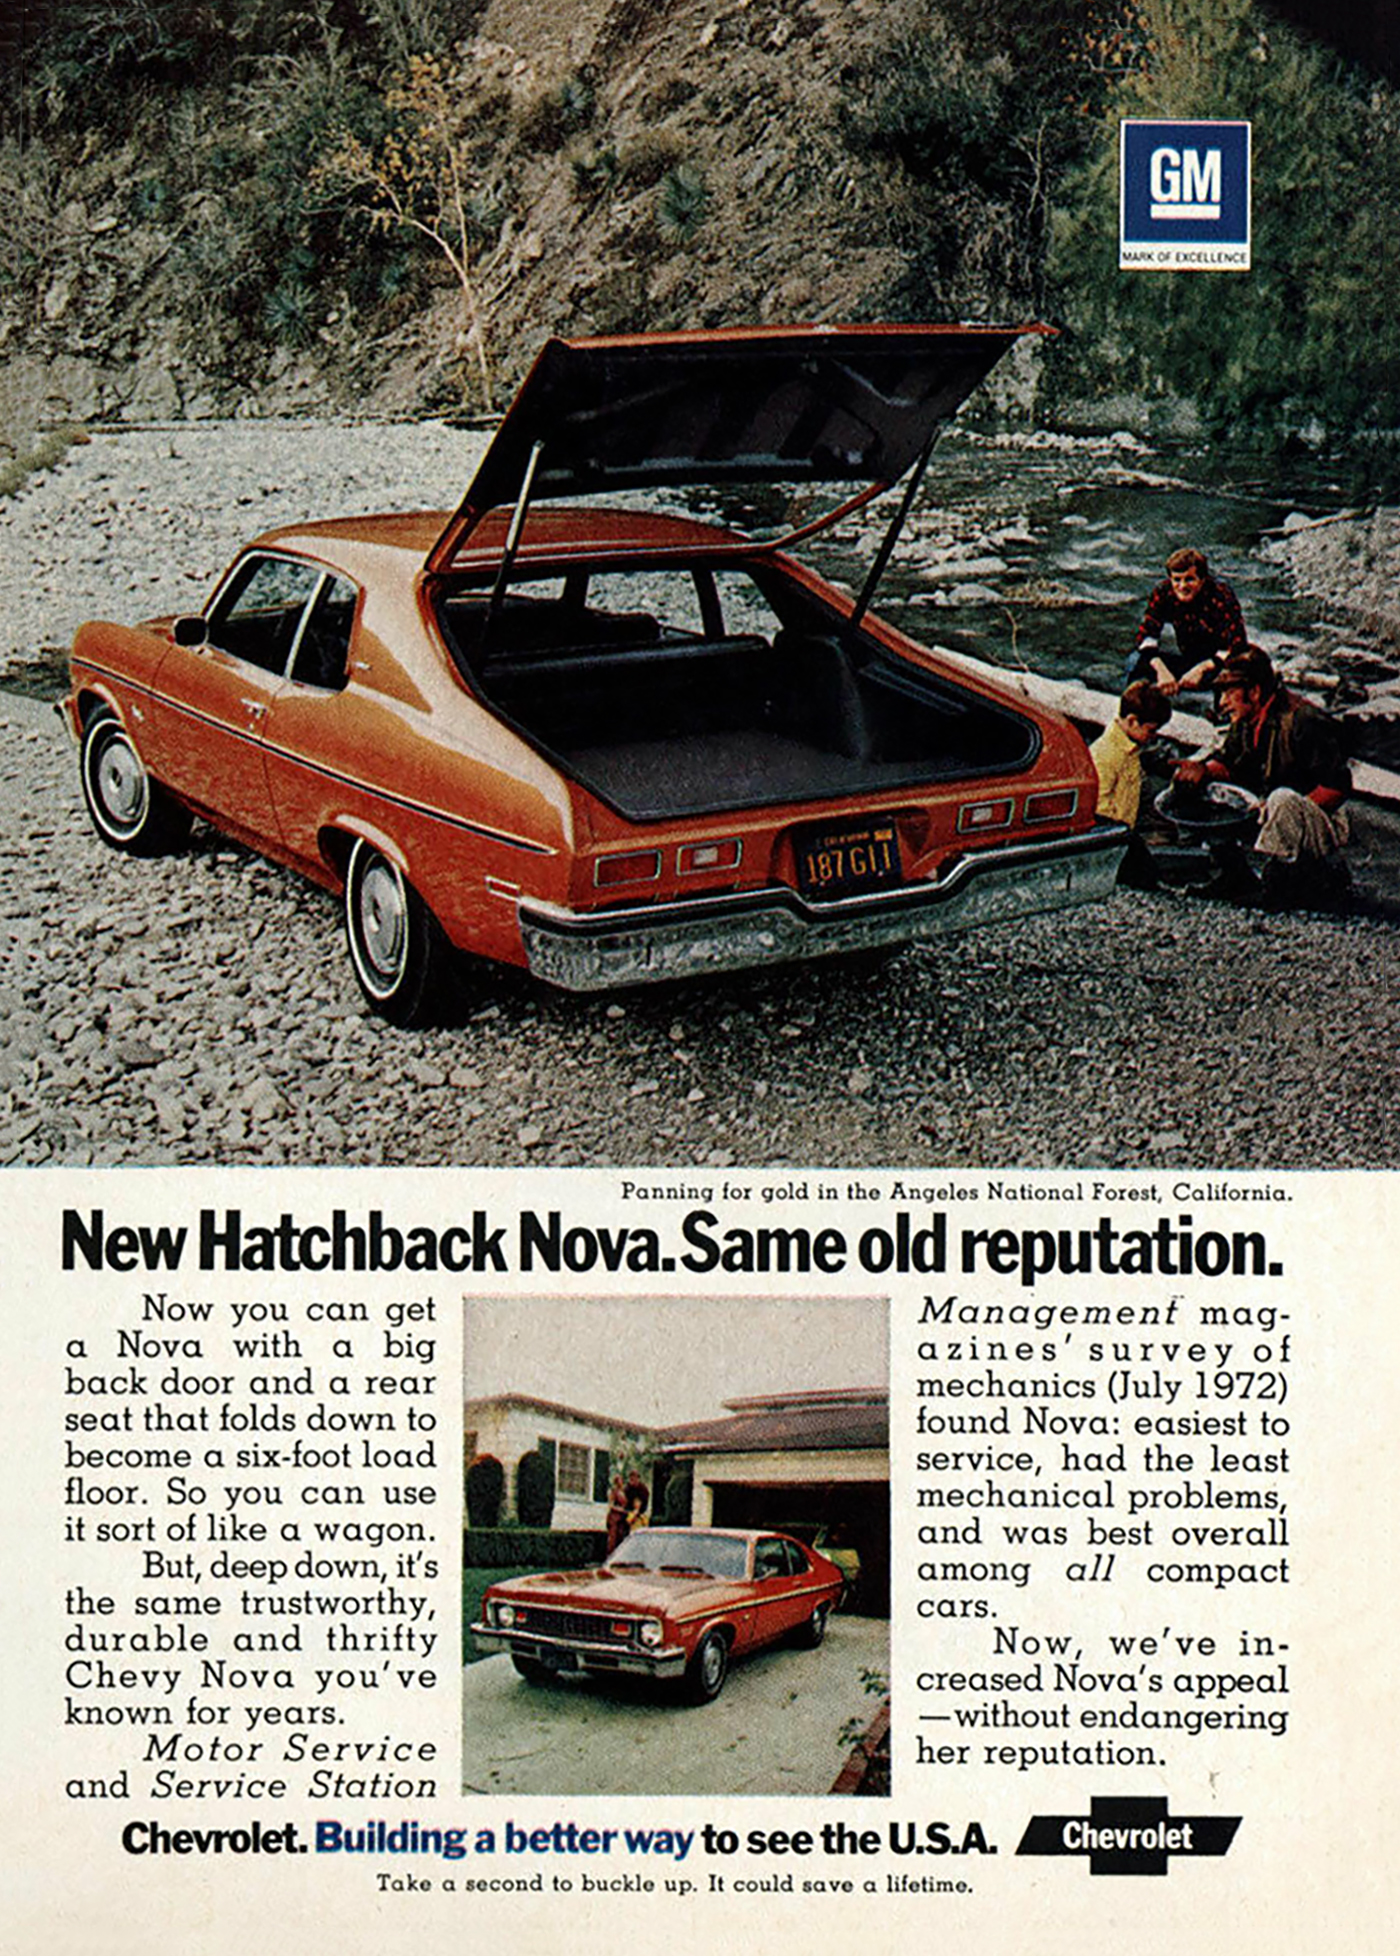 1974 Nova Hatchback 